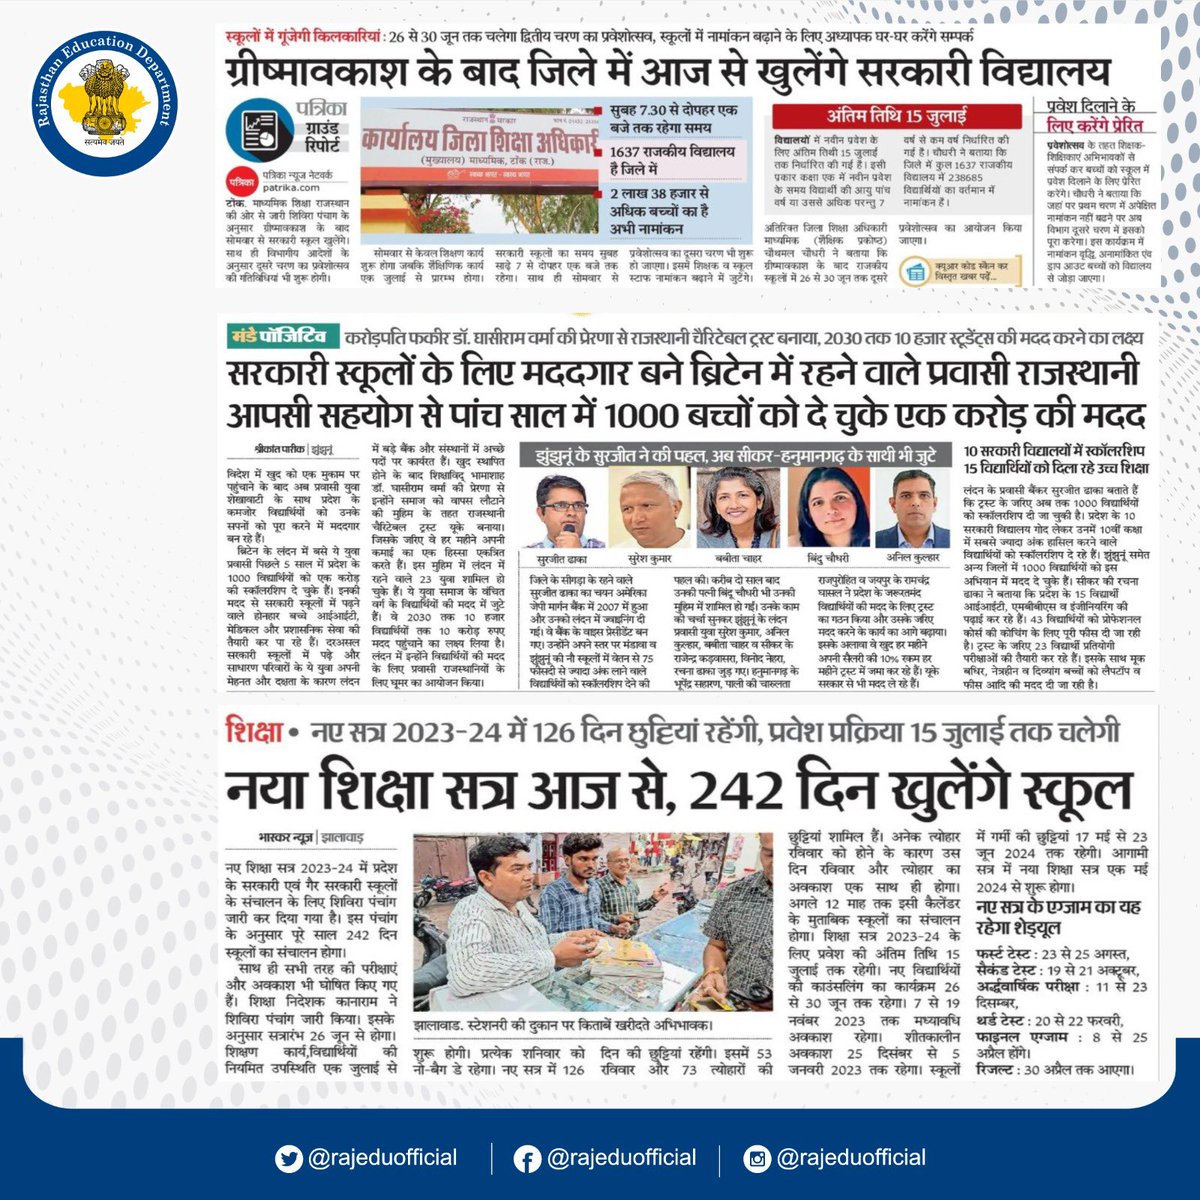 Today’s Media Coverage

#RCScE #SMSA #RajMegaPTM #RKSMBK #Education #Rajasthan #educationinrajasthan #rajasthanshikshavibhag #MediaCoverage